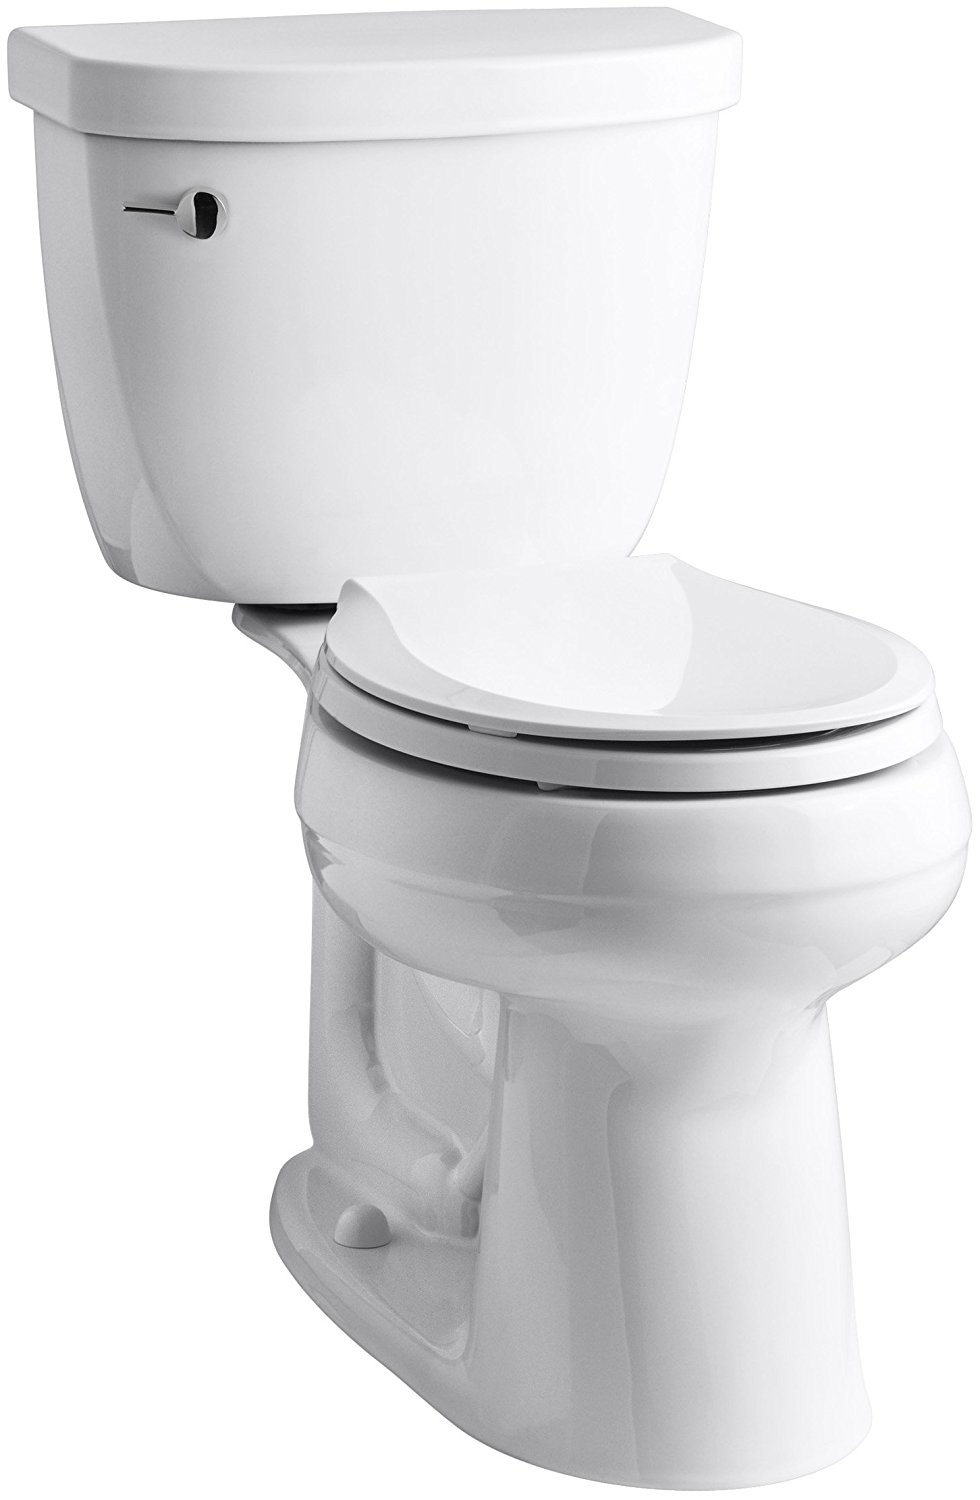 Kohler Cimarron Comfort Height Toilet Review Best Feature Available